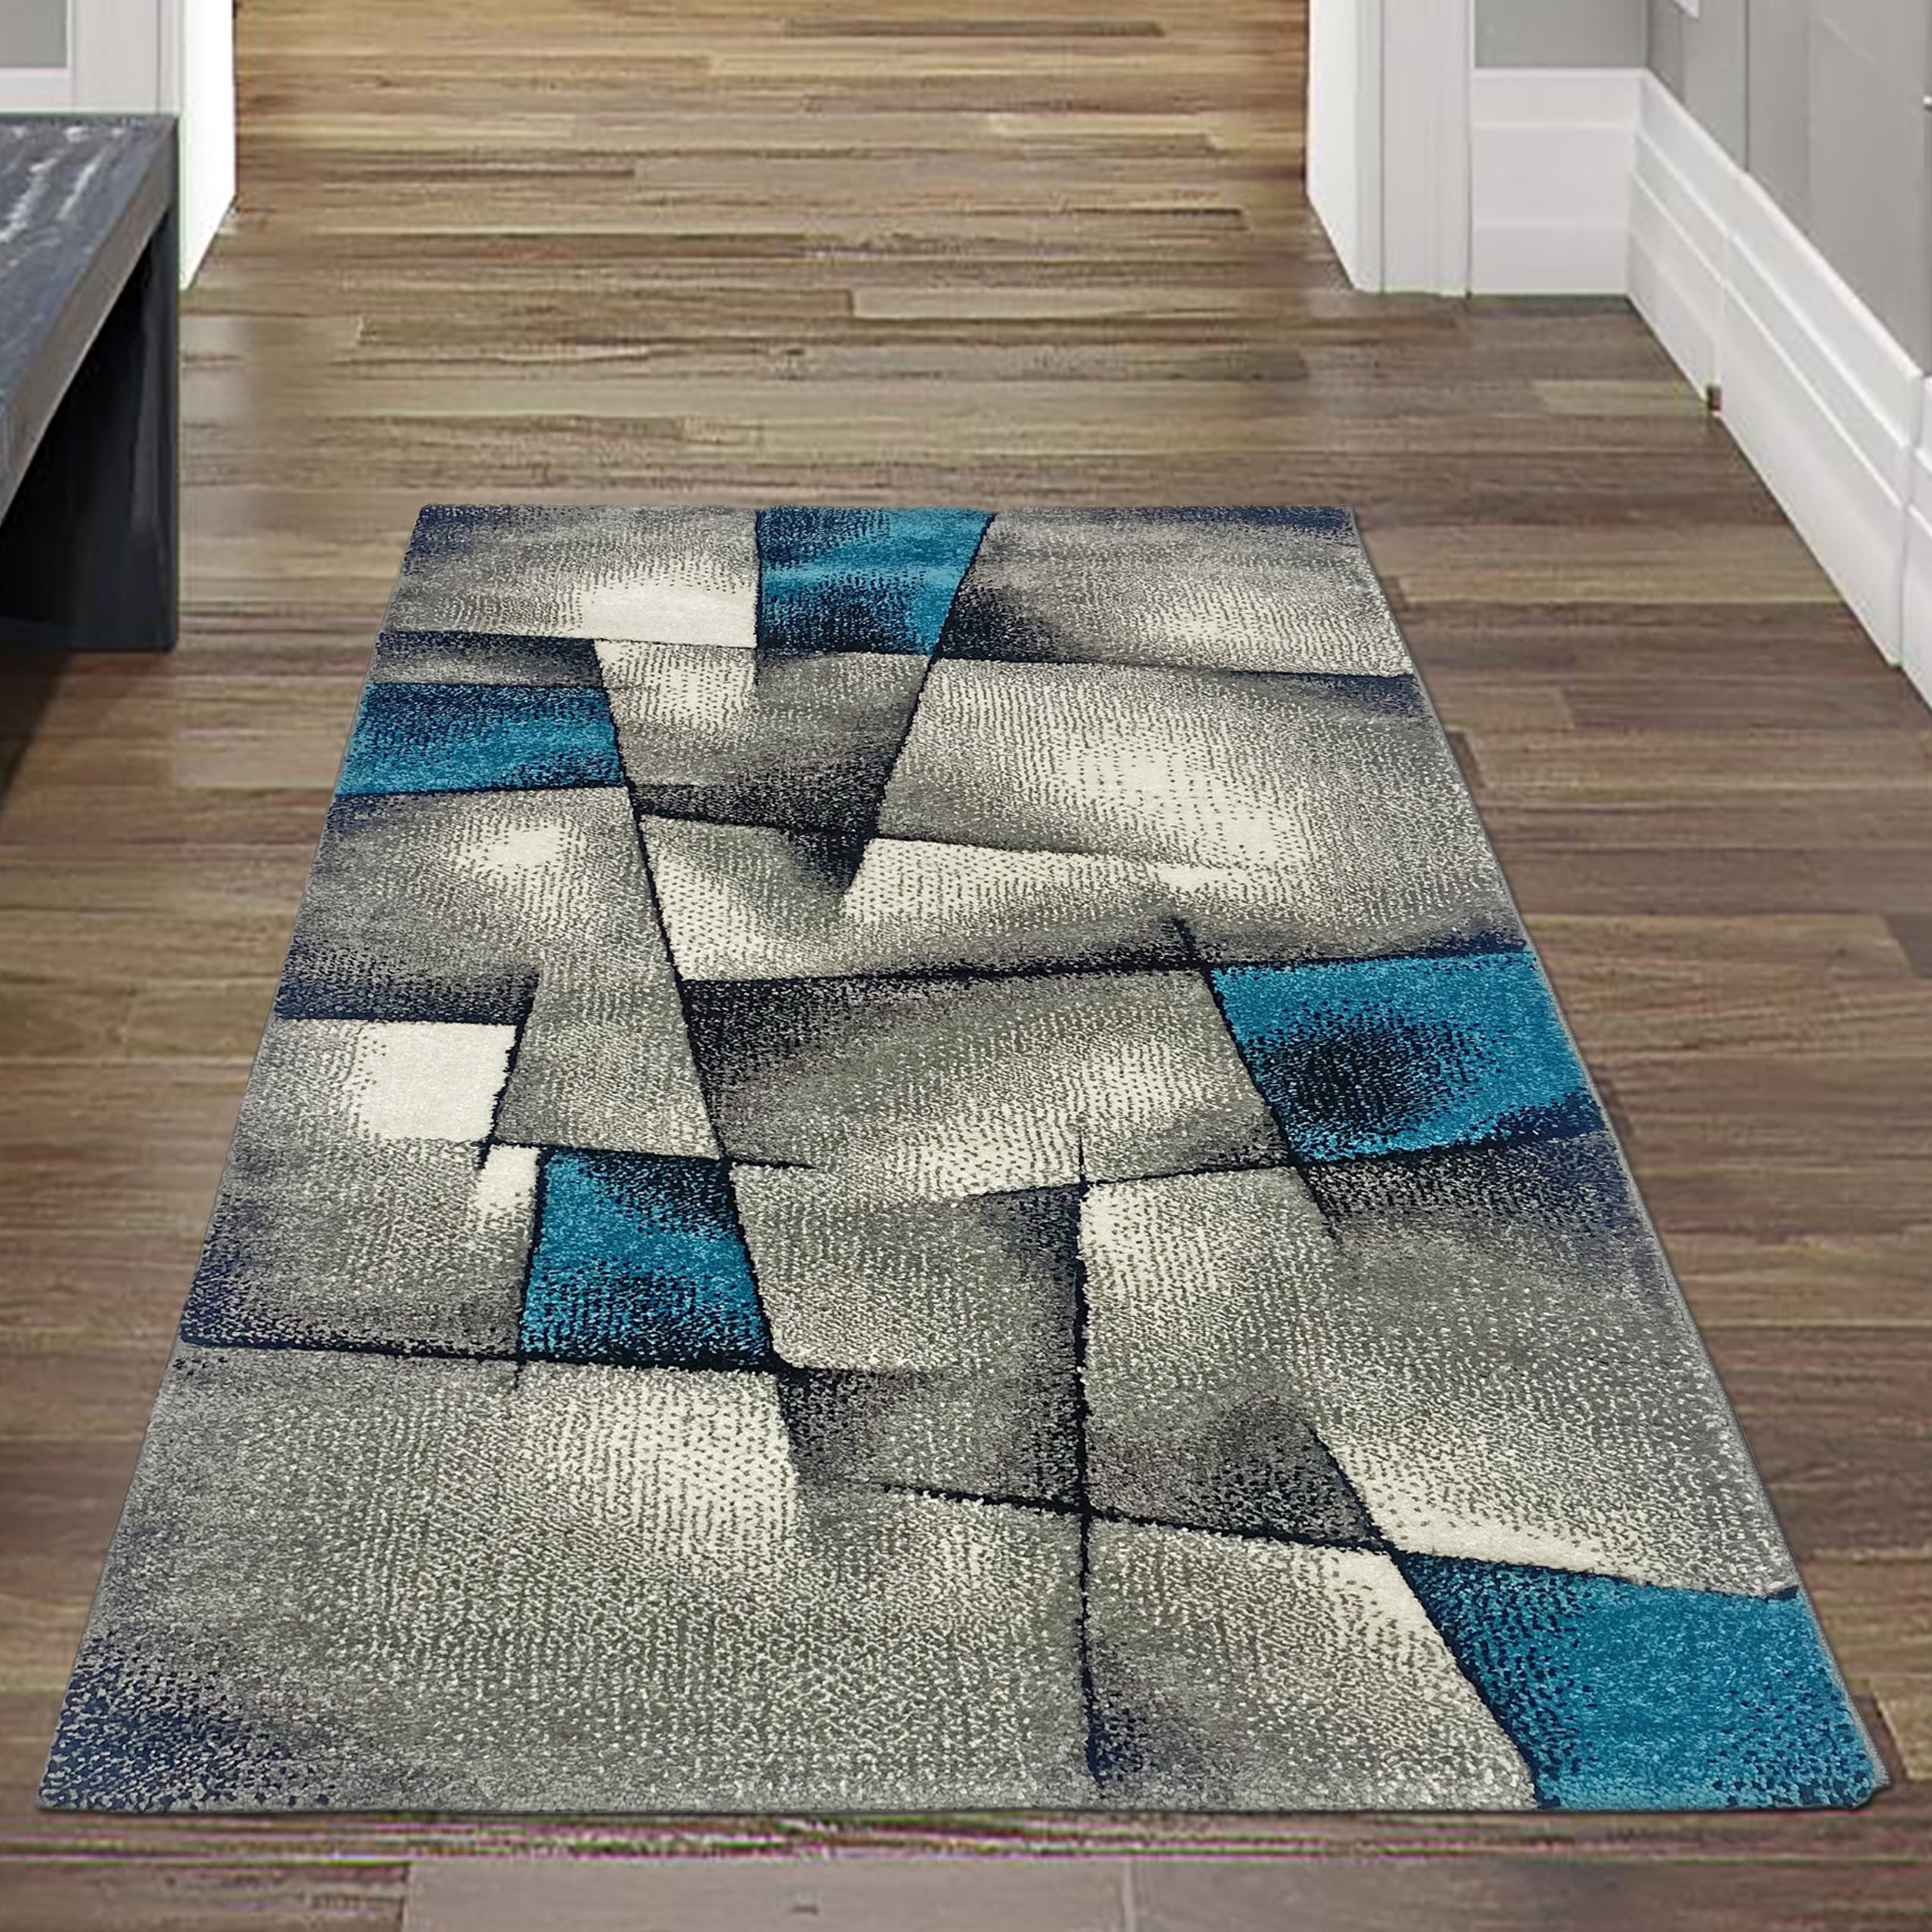 & -Traum dreams cheap - Teppich High-quality Modern and carpet designer at carpets: